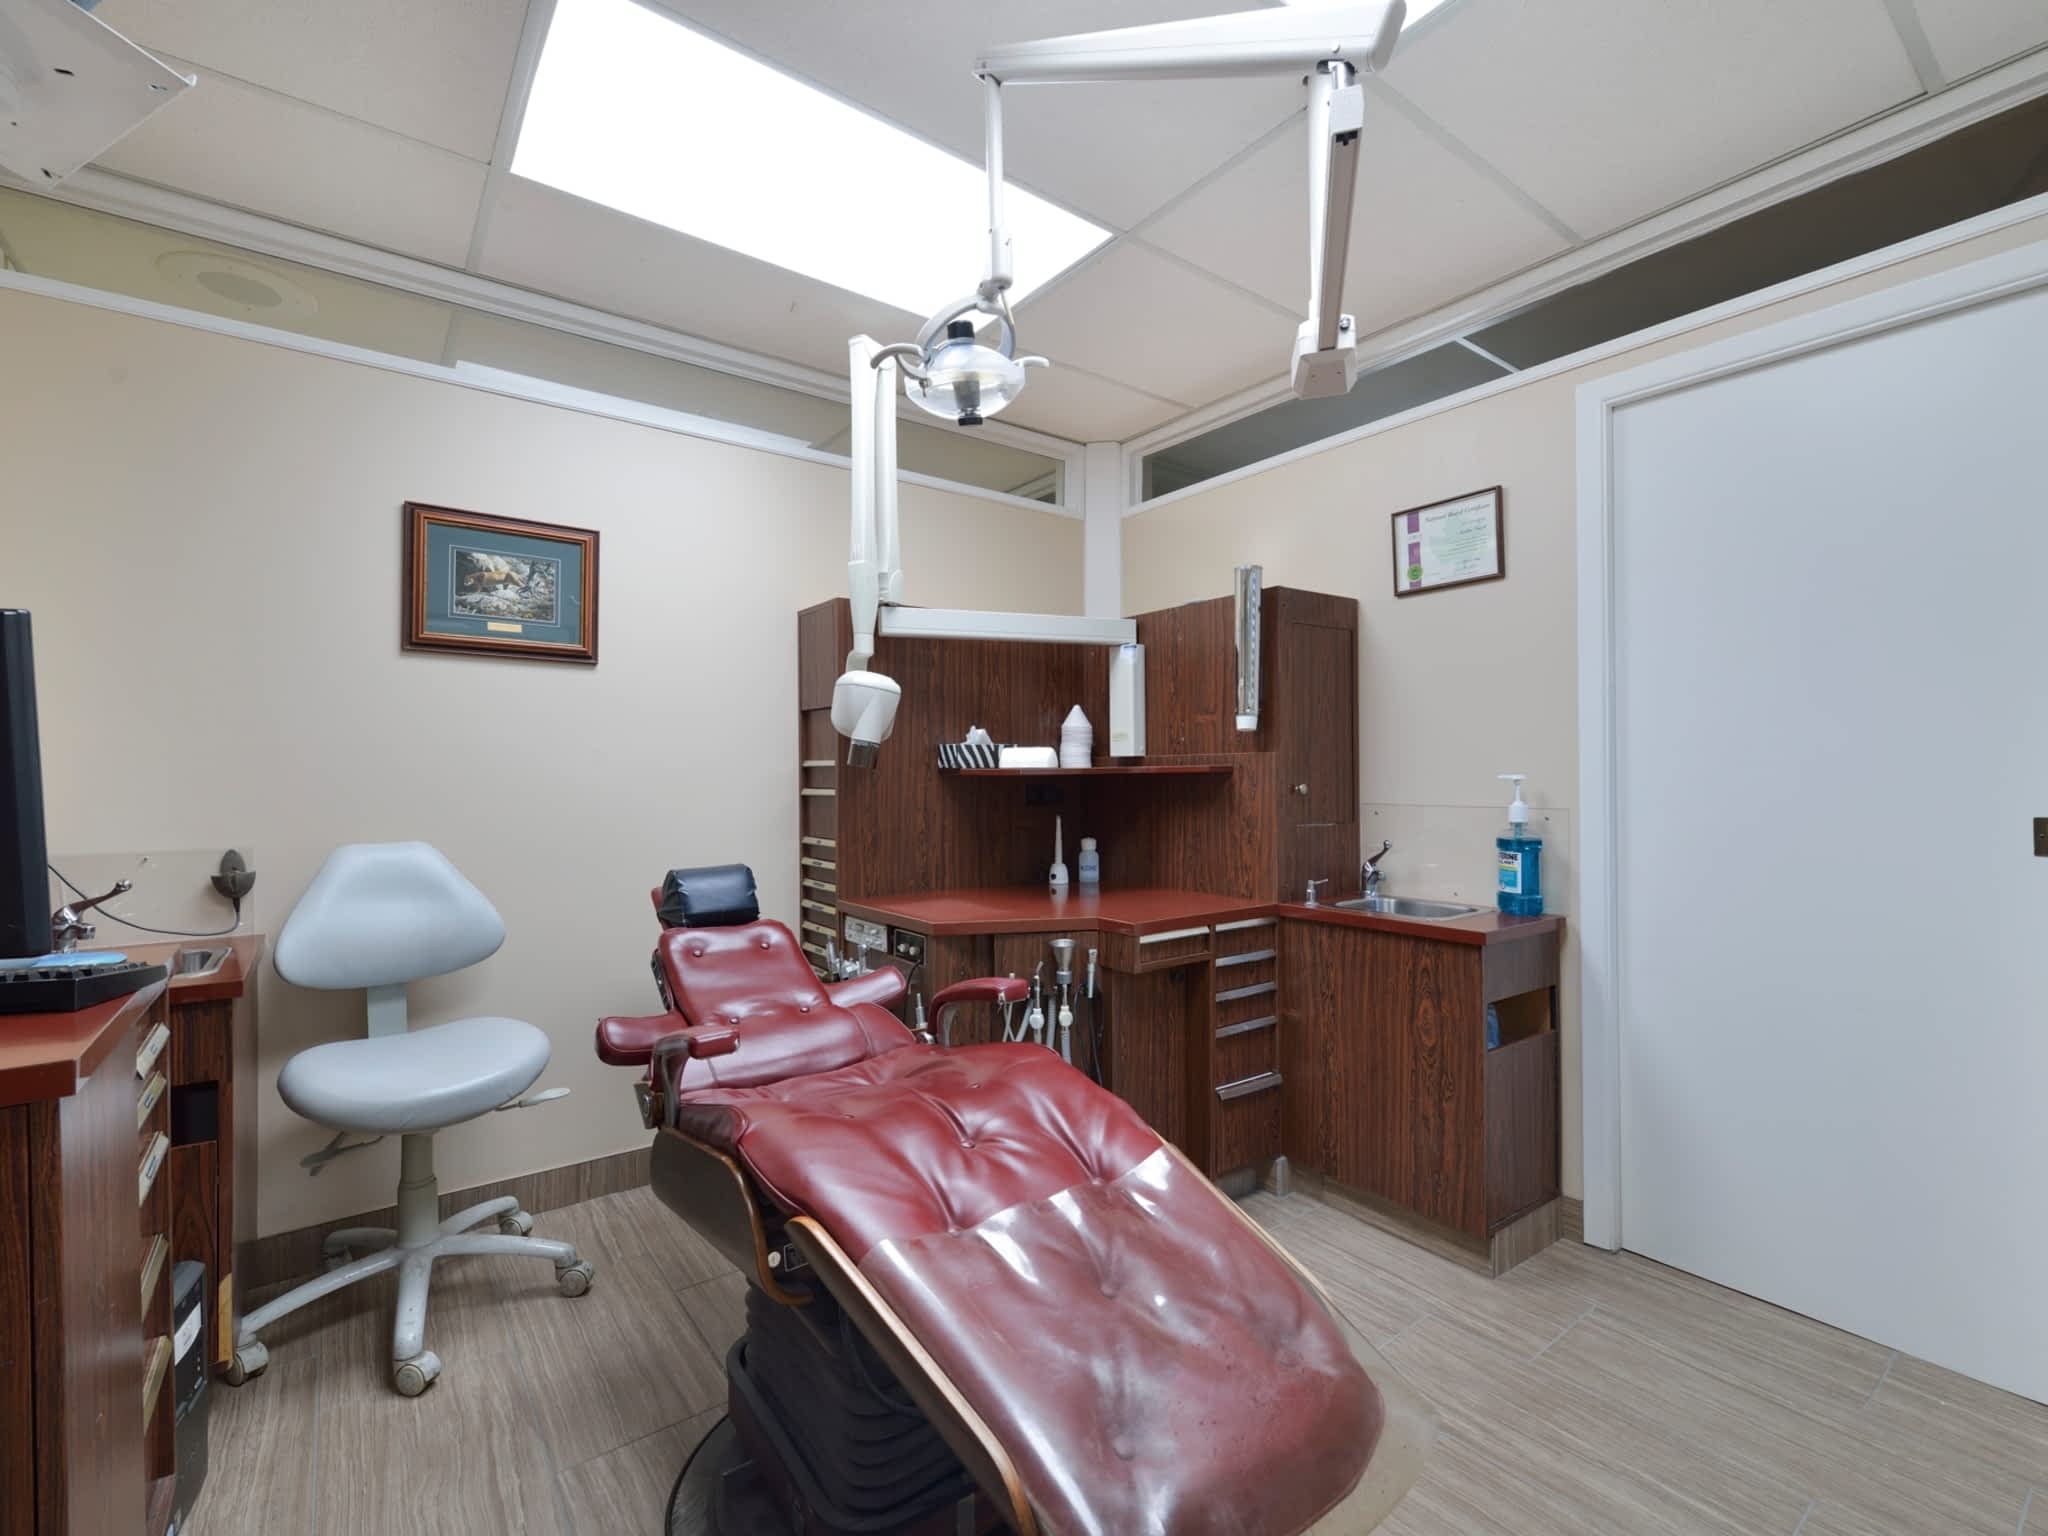 photo Dawson Dental Centre